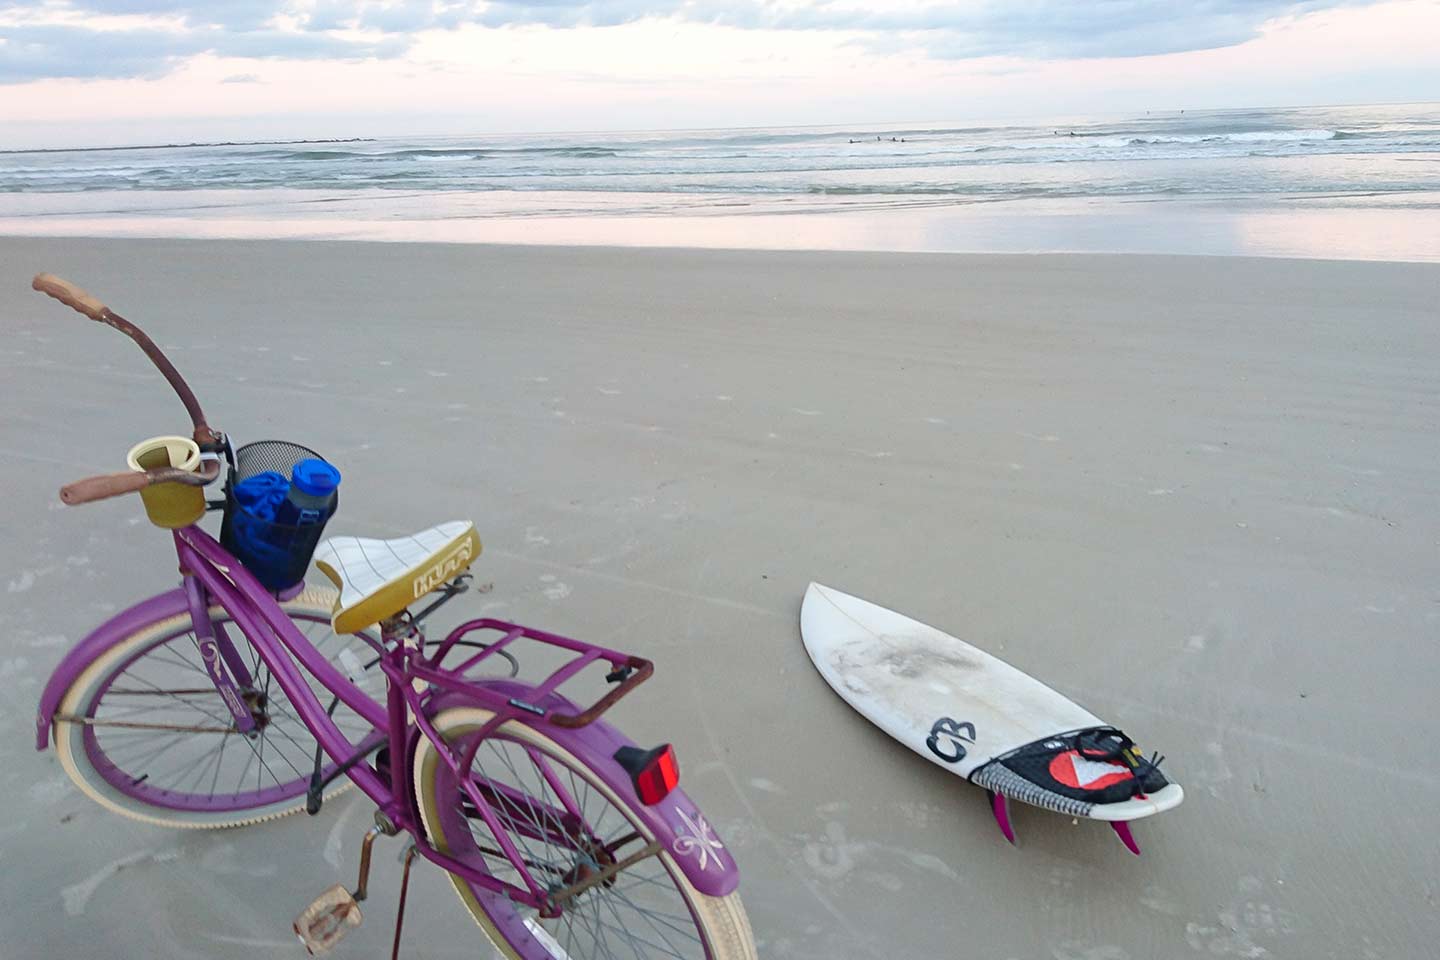 Purple Bike and Surf Board on the Beach